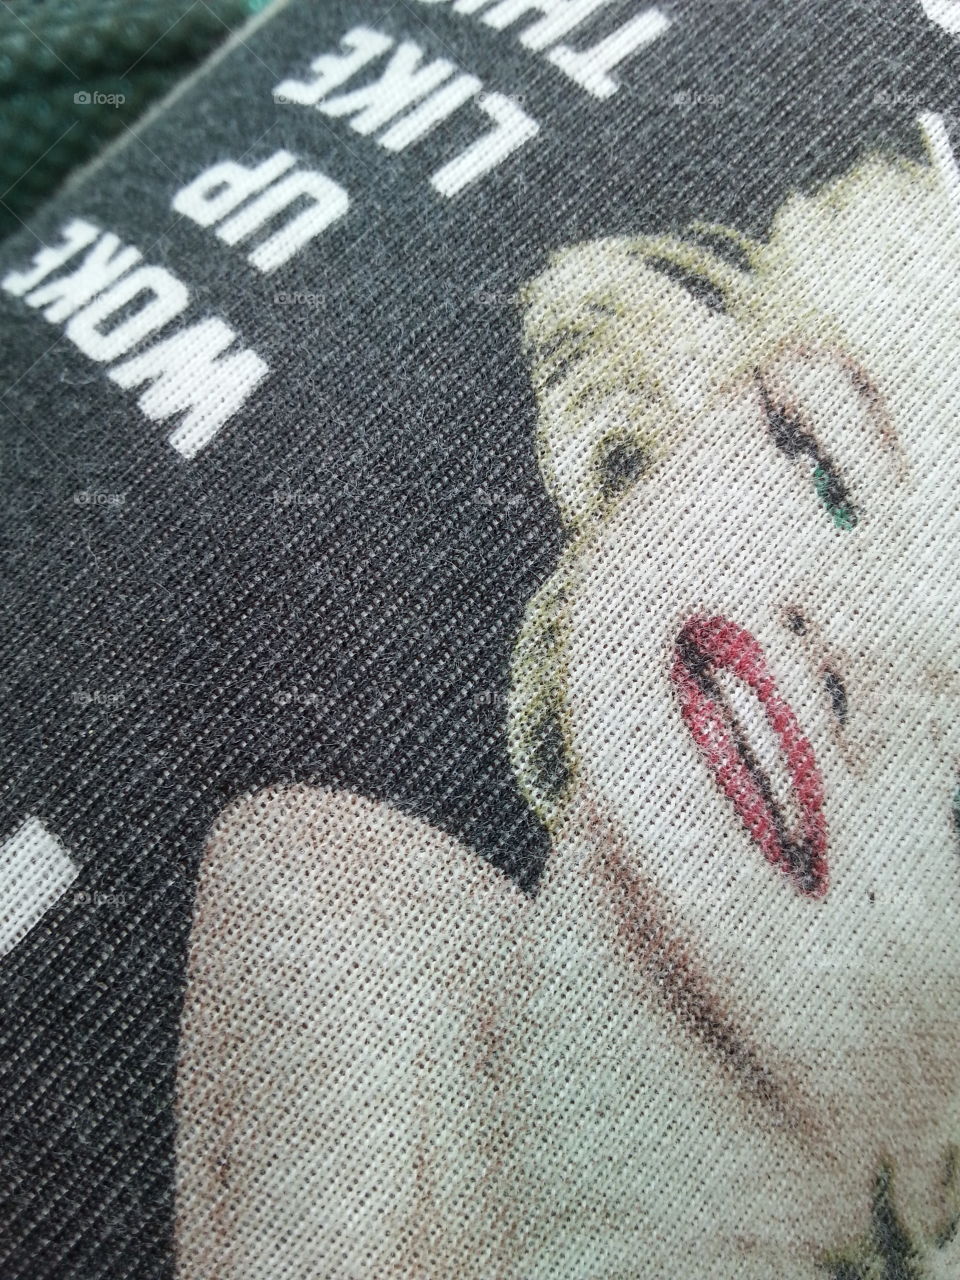 Marilyn Monroe ready